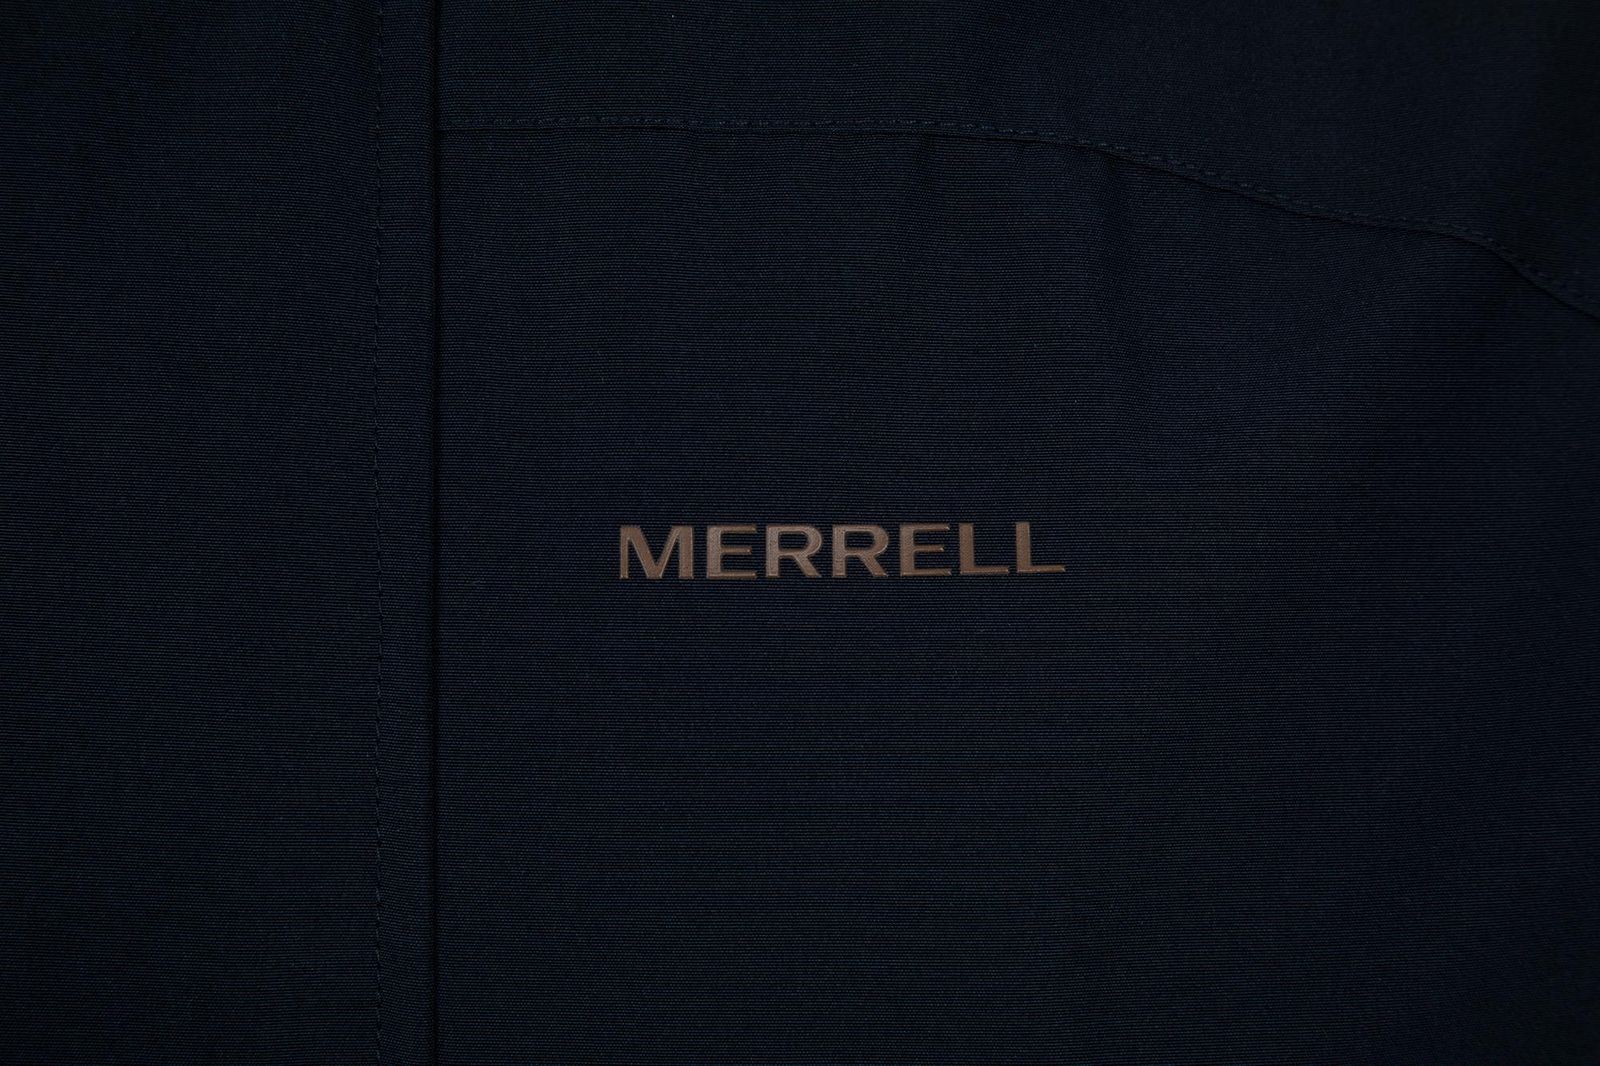   Merrell Men's Windbreaker, : -. S19AMRJAM09-Z4.  52